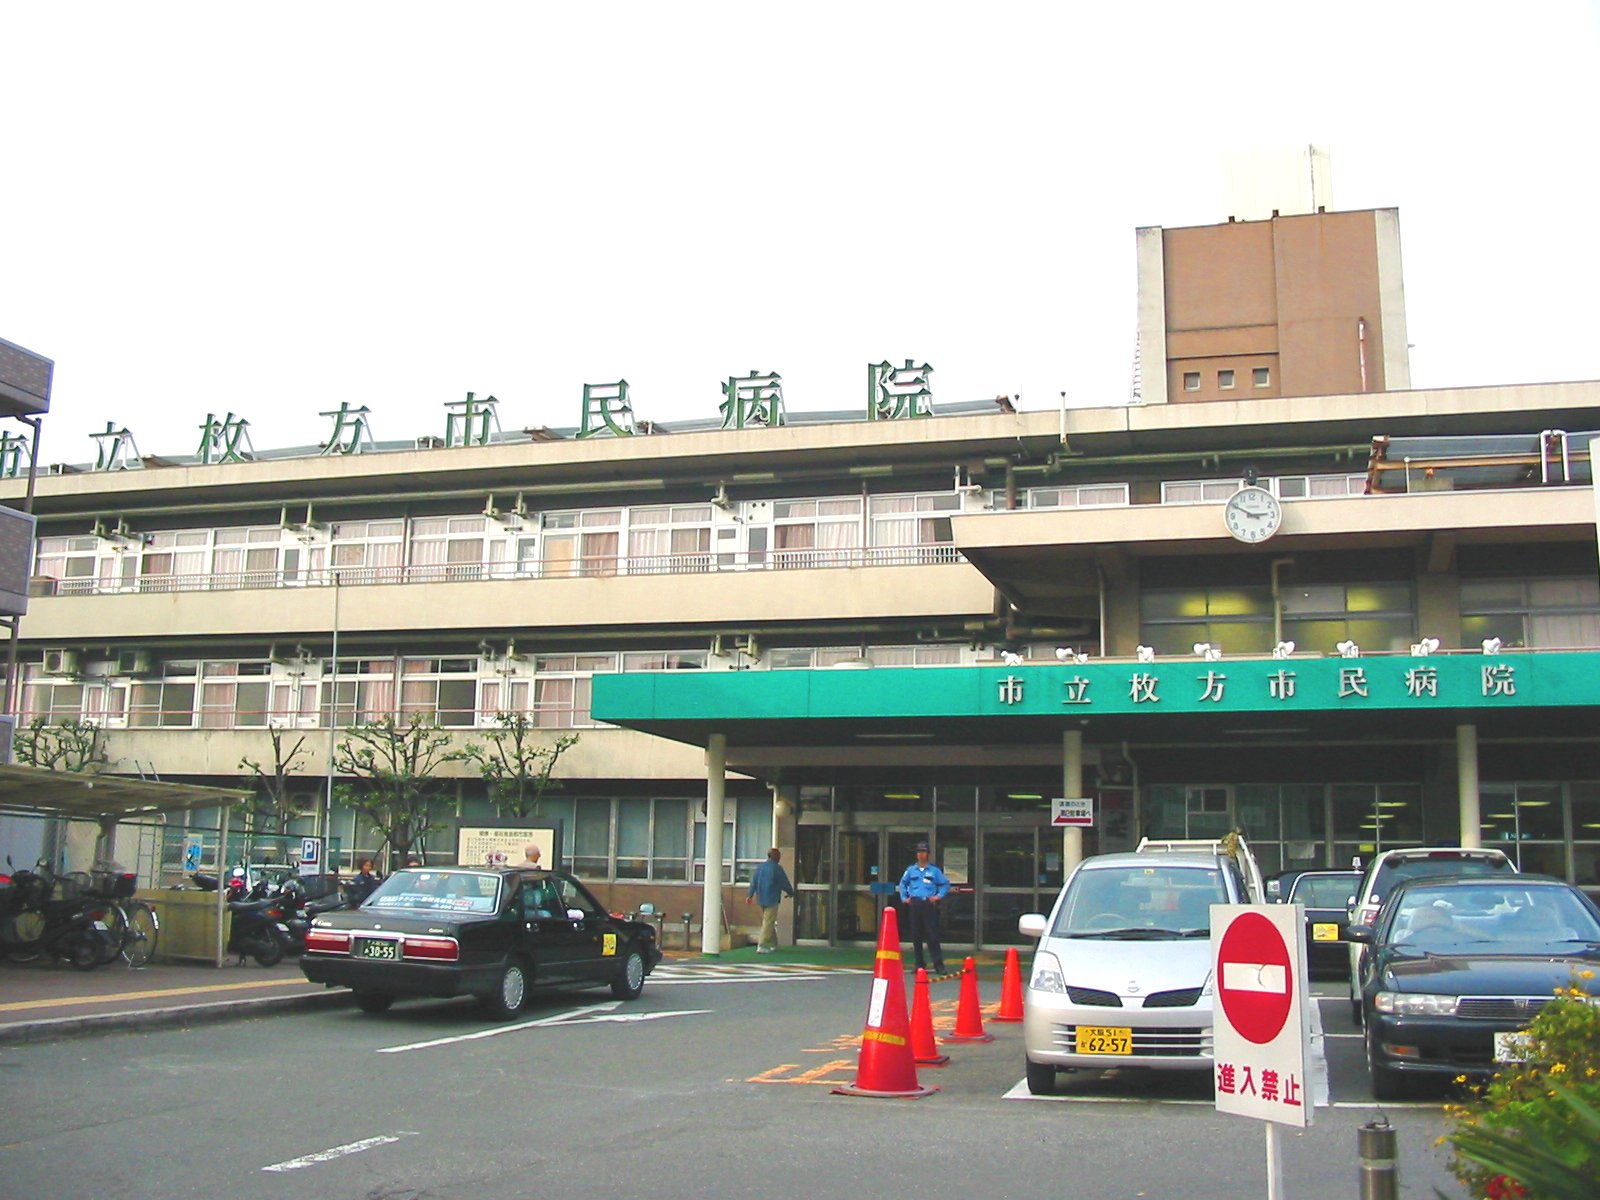 Hospital. 1012m to Hirakata Municipal Hospital (Hospital)